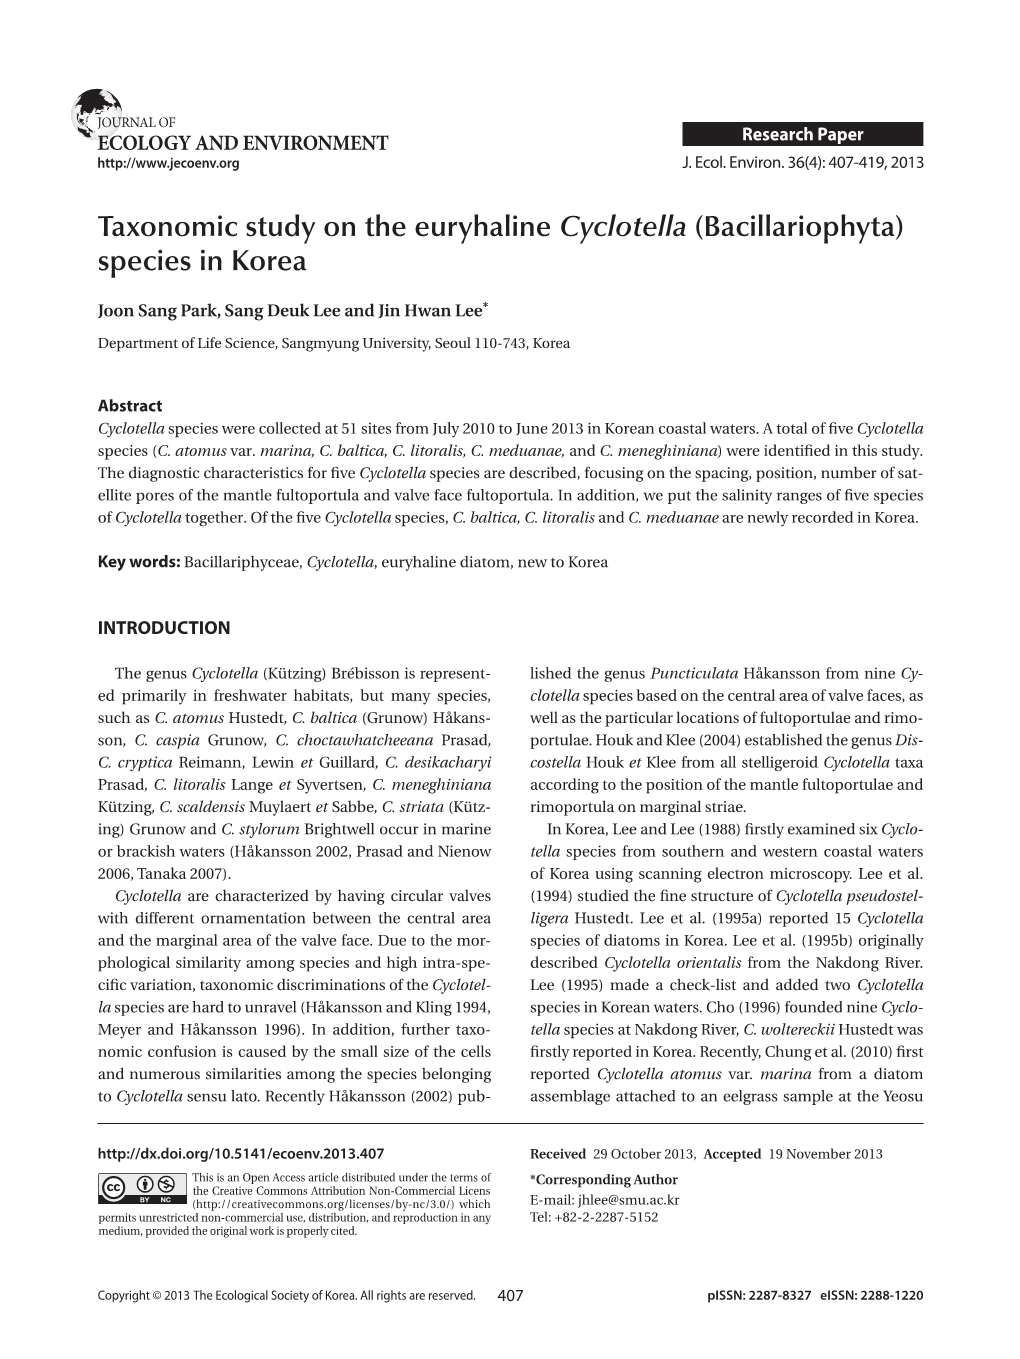 Taxonomic Study on the Euryhaline Cyclotella (Bacillariophyta) Species in Korea